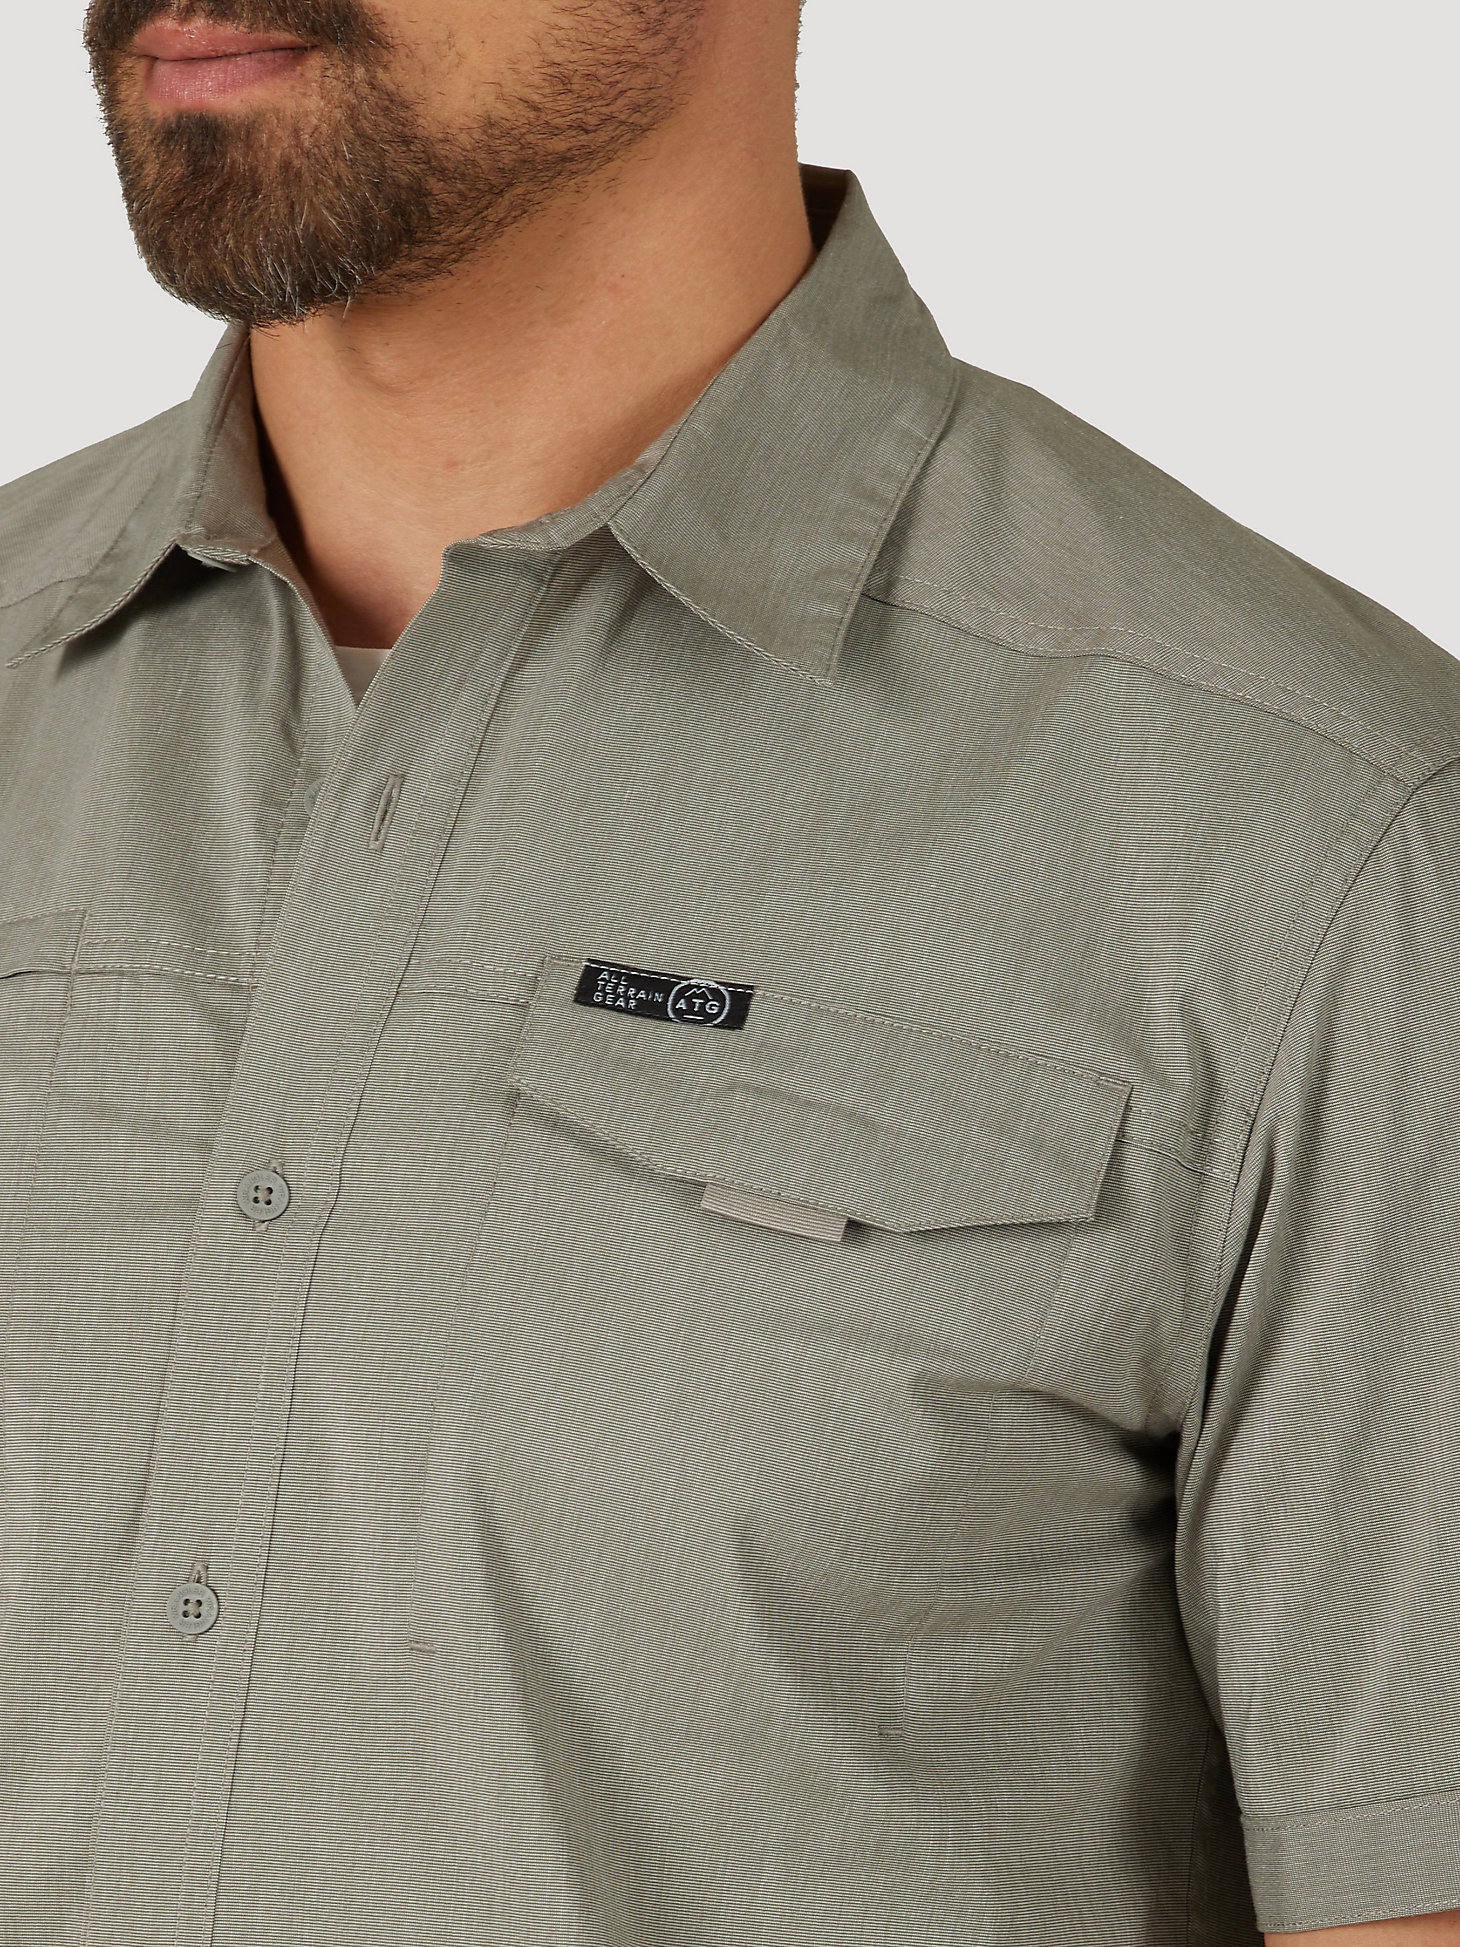 Short Sleeve Zip Pocket Shirt in Dusty Olive alternative view 4